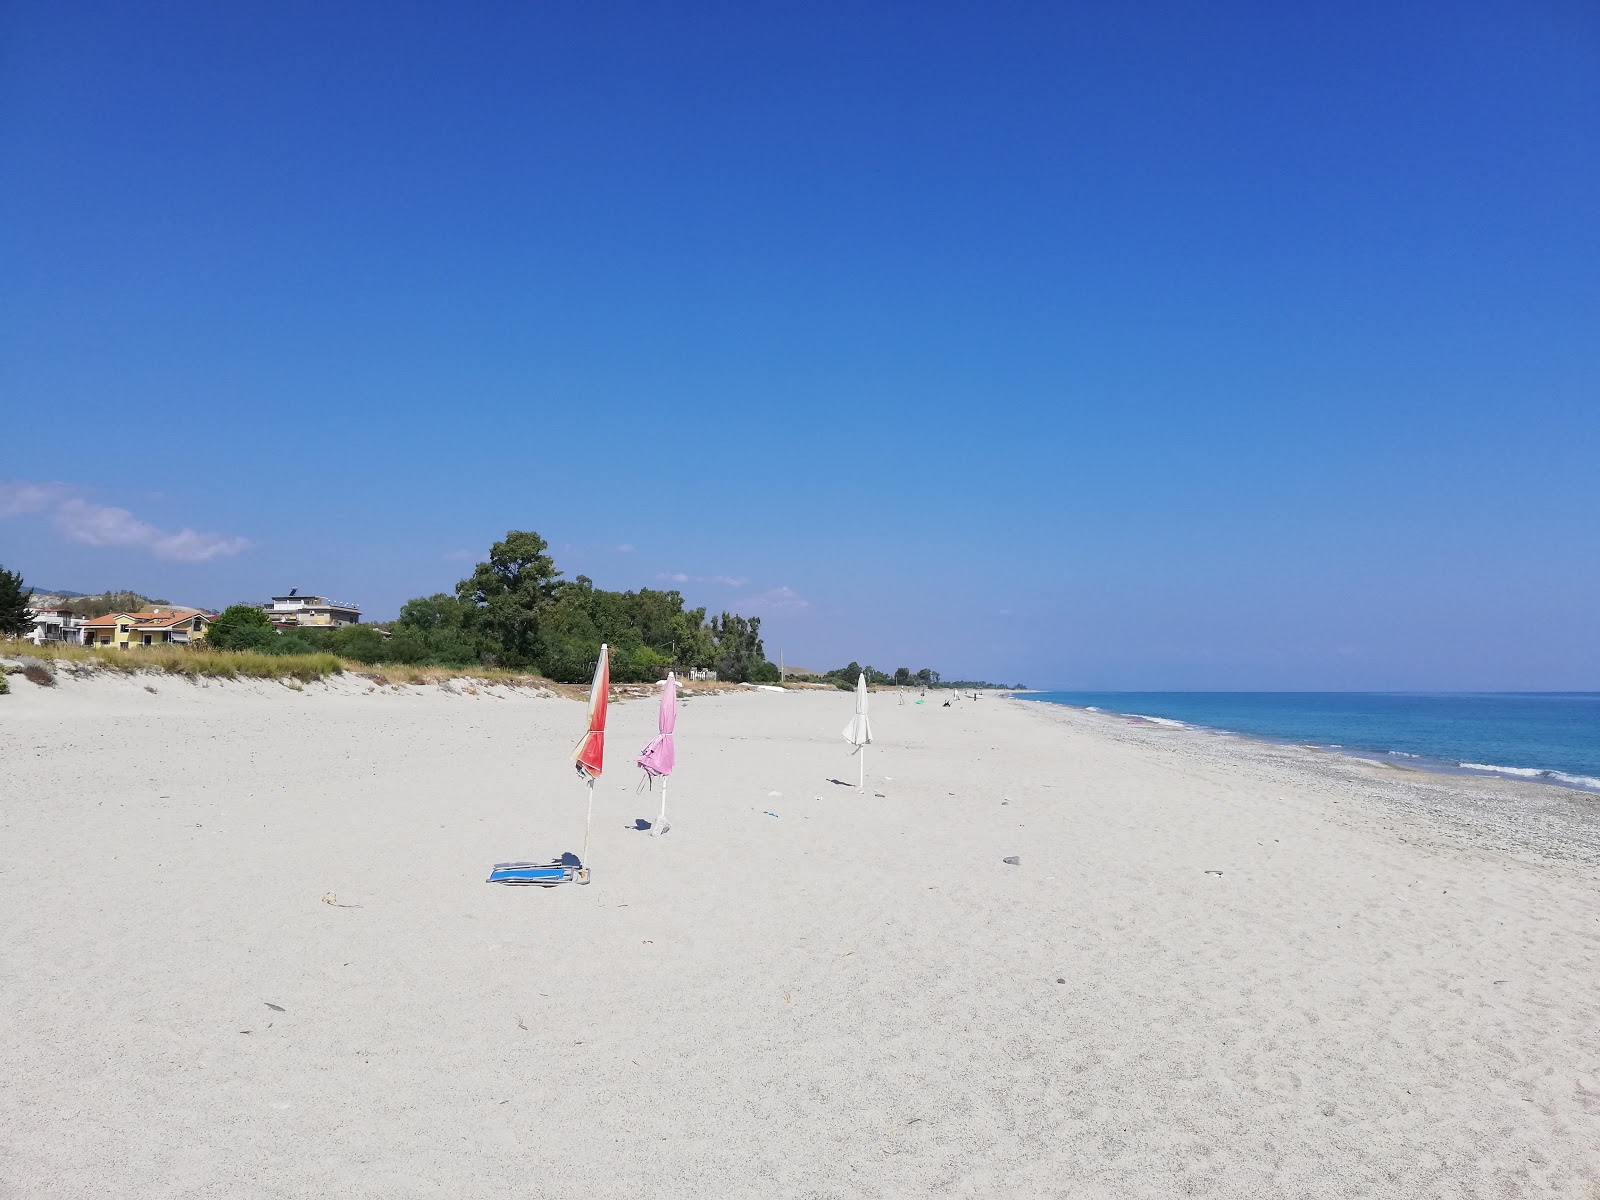 Foto von St Caterina dello Ionio Marina mit langer gerader strand